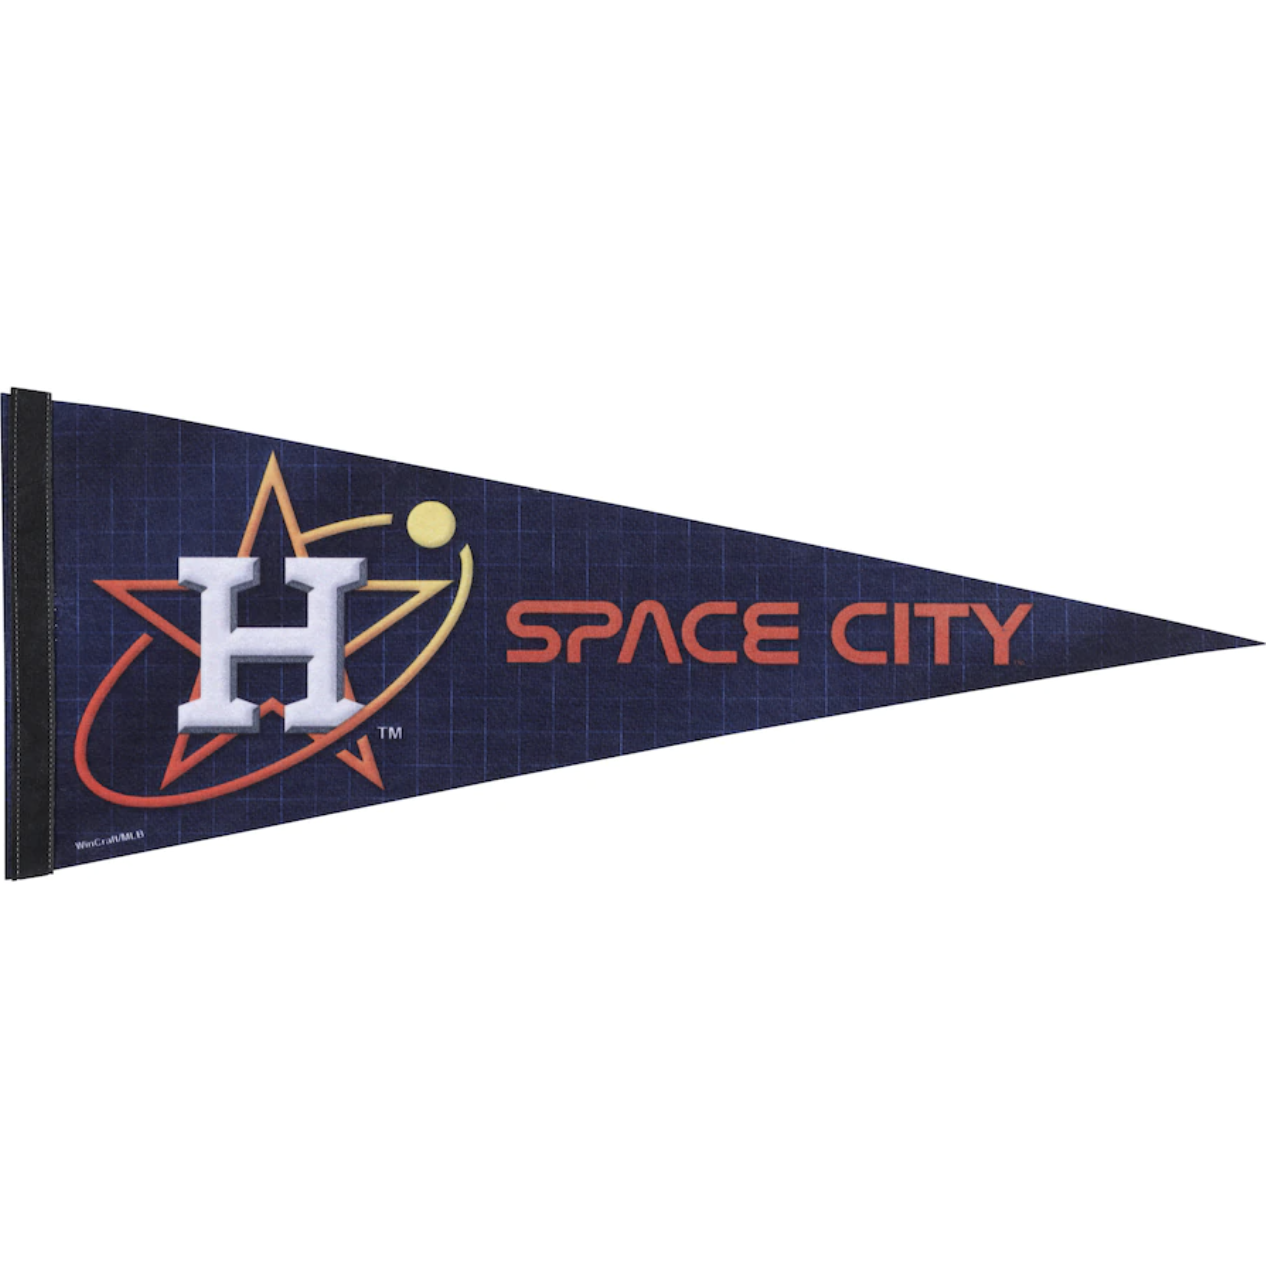 Astros Space City Gear is a Fashion Grand Slam